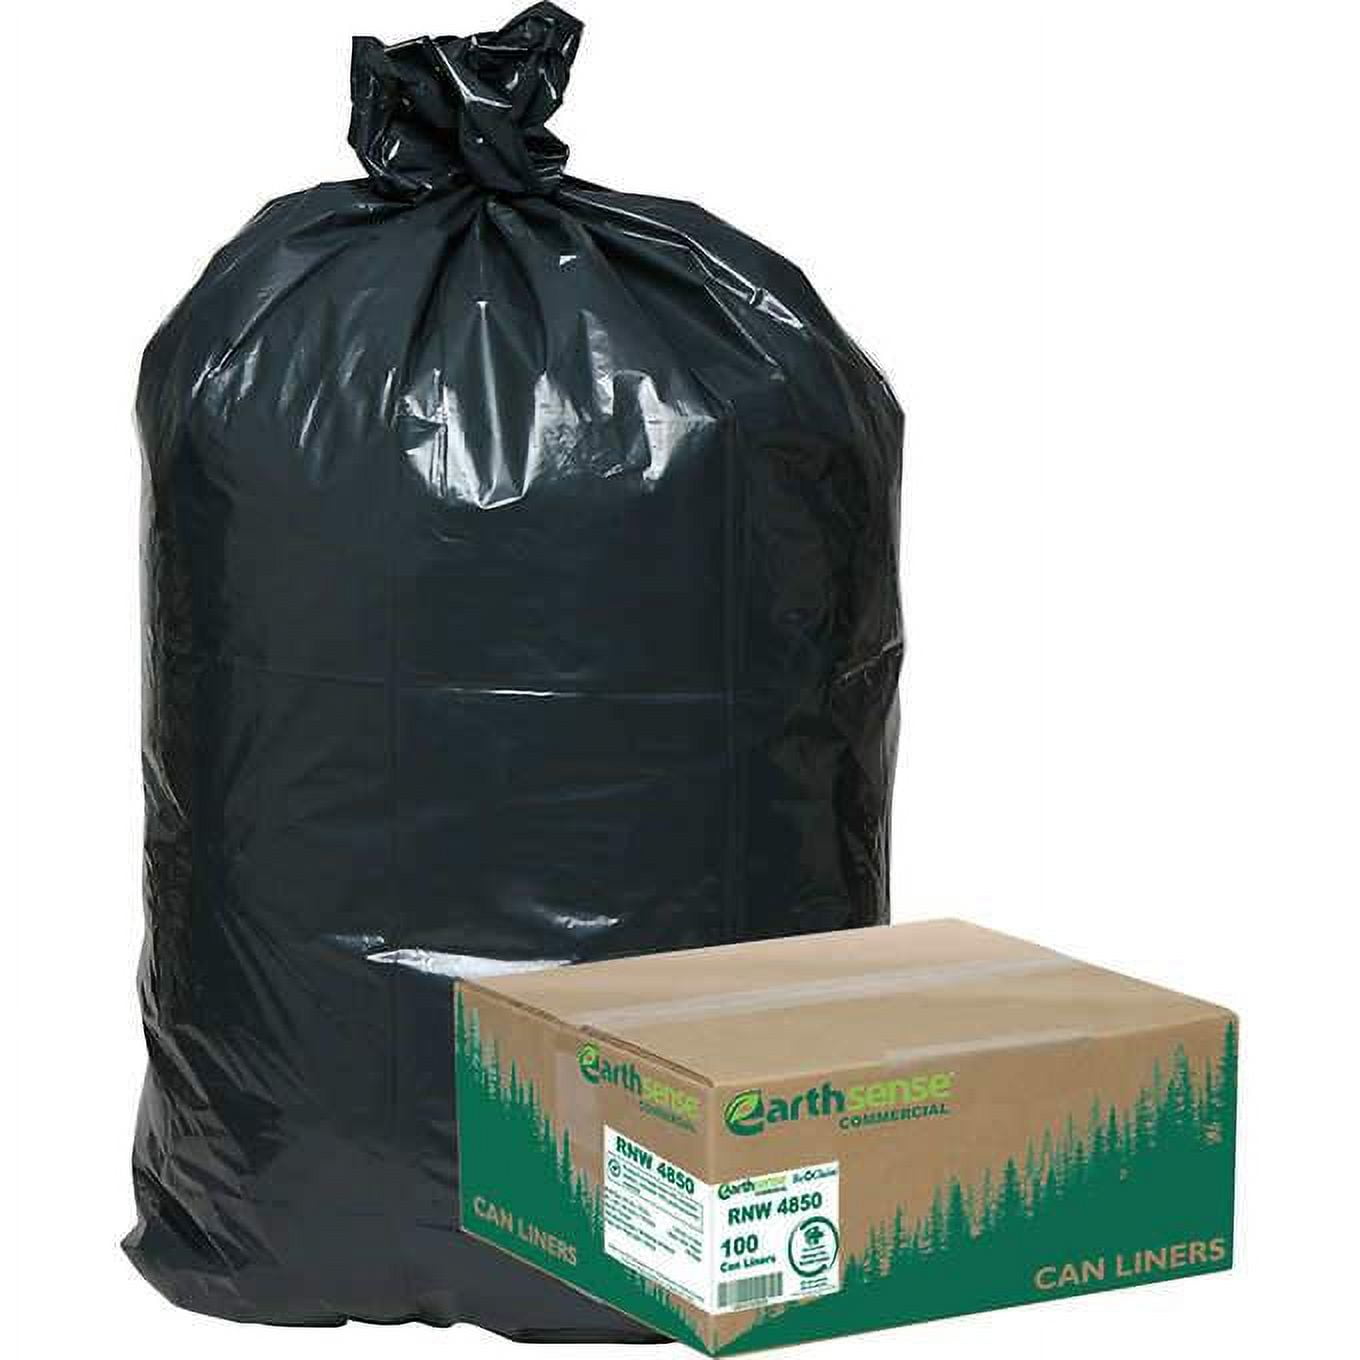 Ultrasac - Extra Large Heavy Duty Trash Bags, 44 Gallon, 1.8 Mil